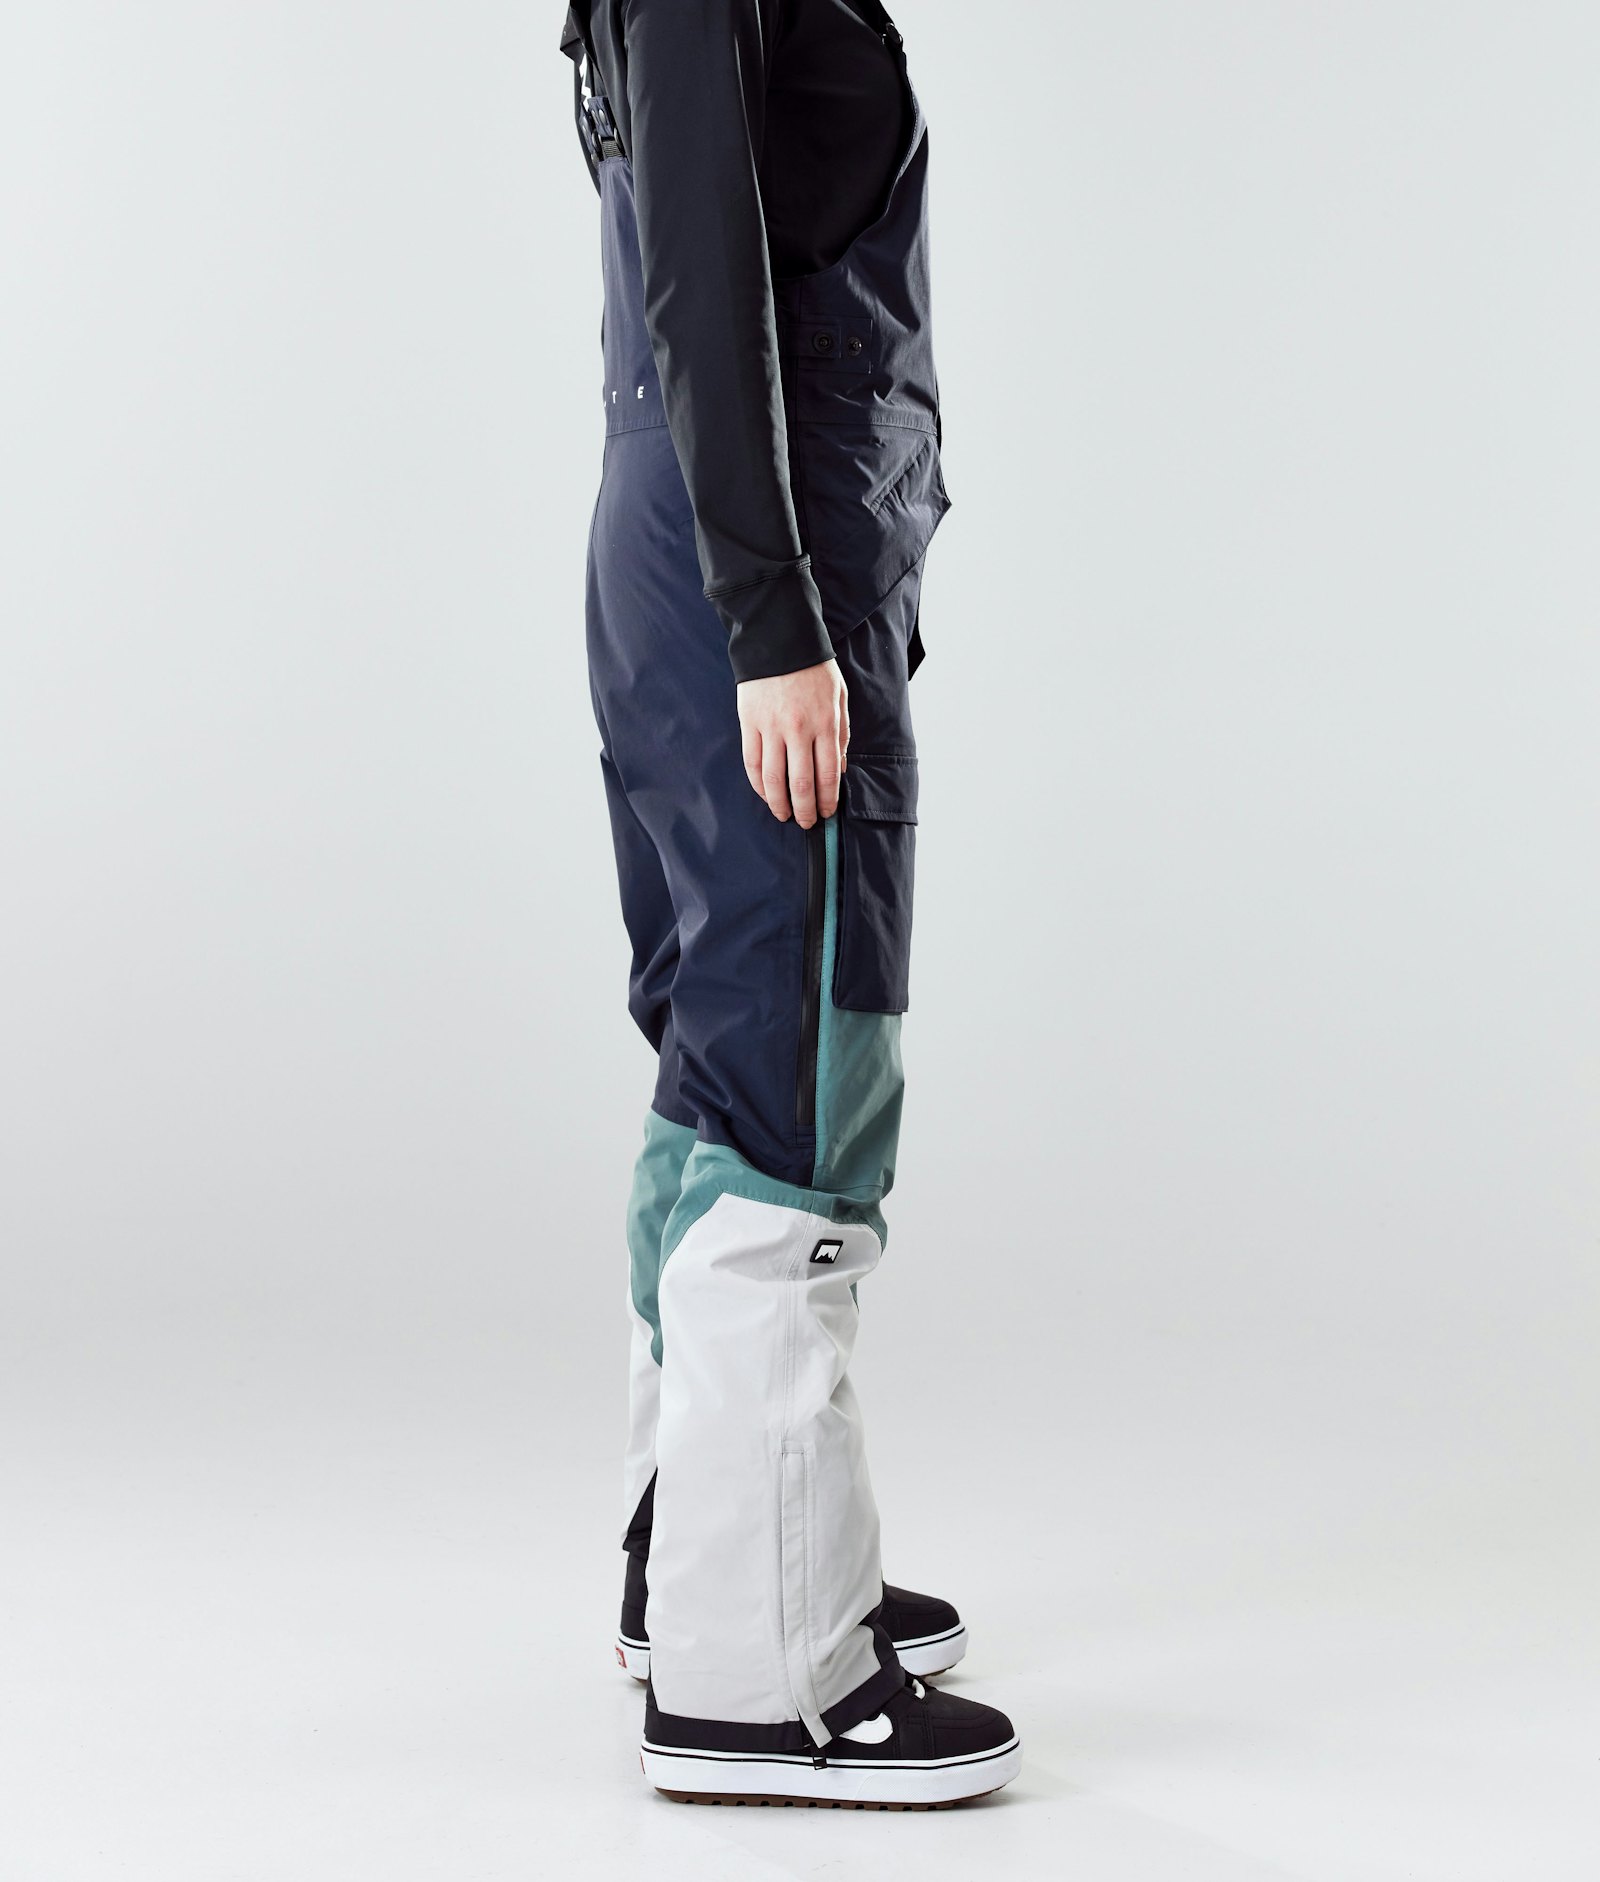 Fawk W 2020 Snowboard Pants Women Marine/Atlantic/Light Grey